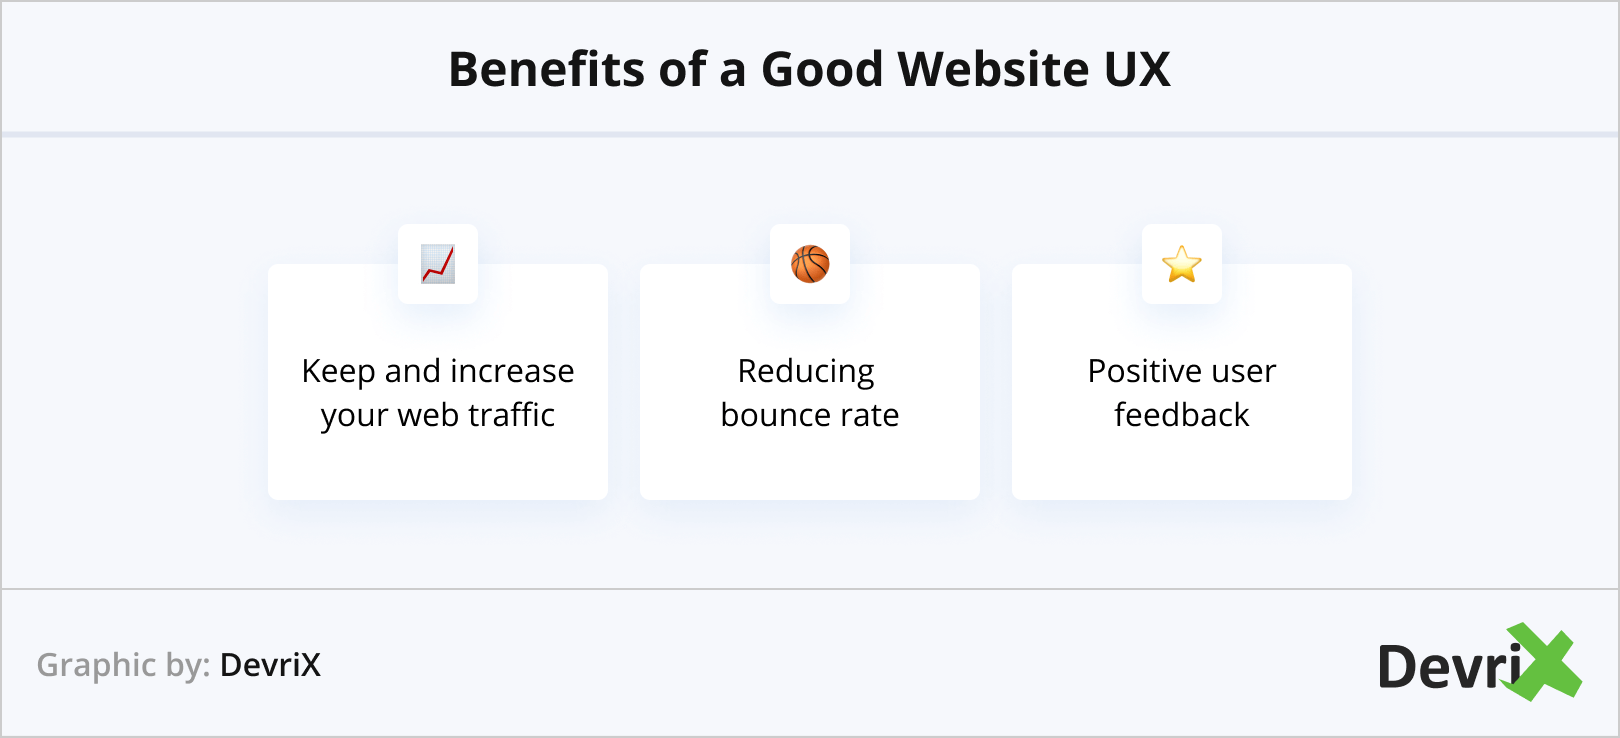 Benefits of a Good Website UX